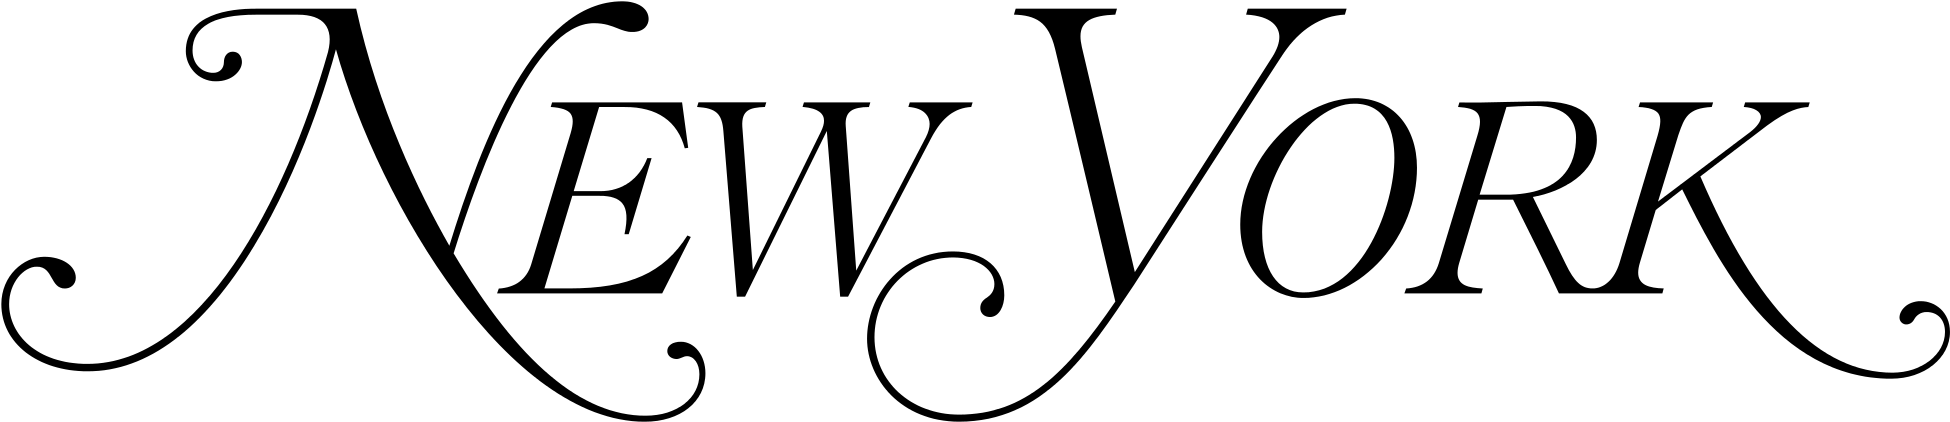 Open - New York Magazine Logo Png (2000x471)